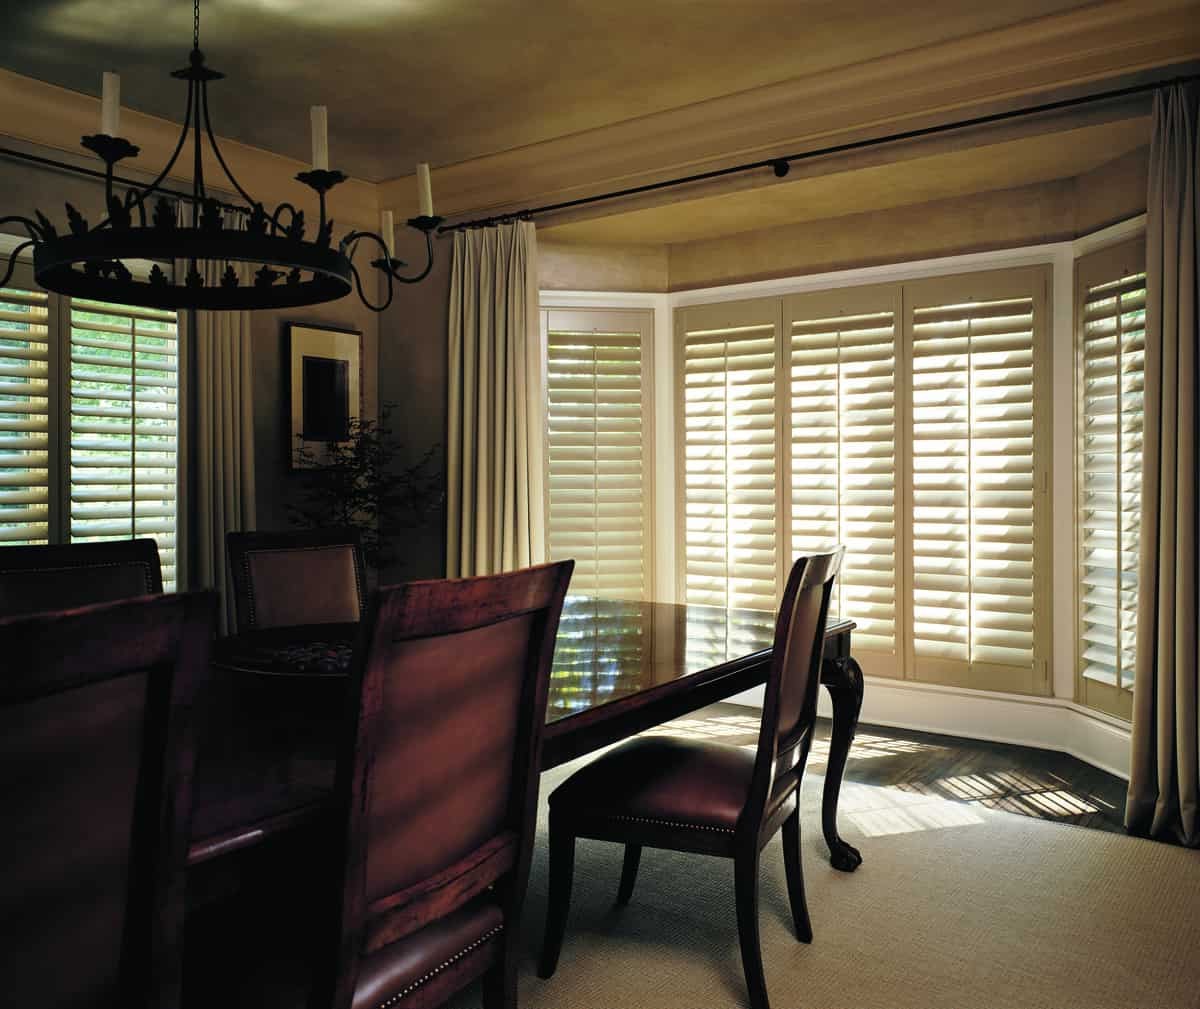 Heritance® Hardwood Shutters Federal Way, Washington (WA) tips for using hardwood shutters in window treatments.